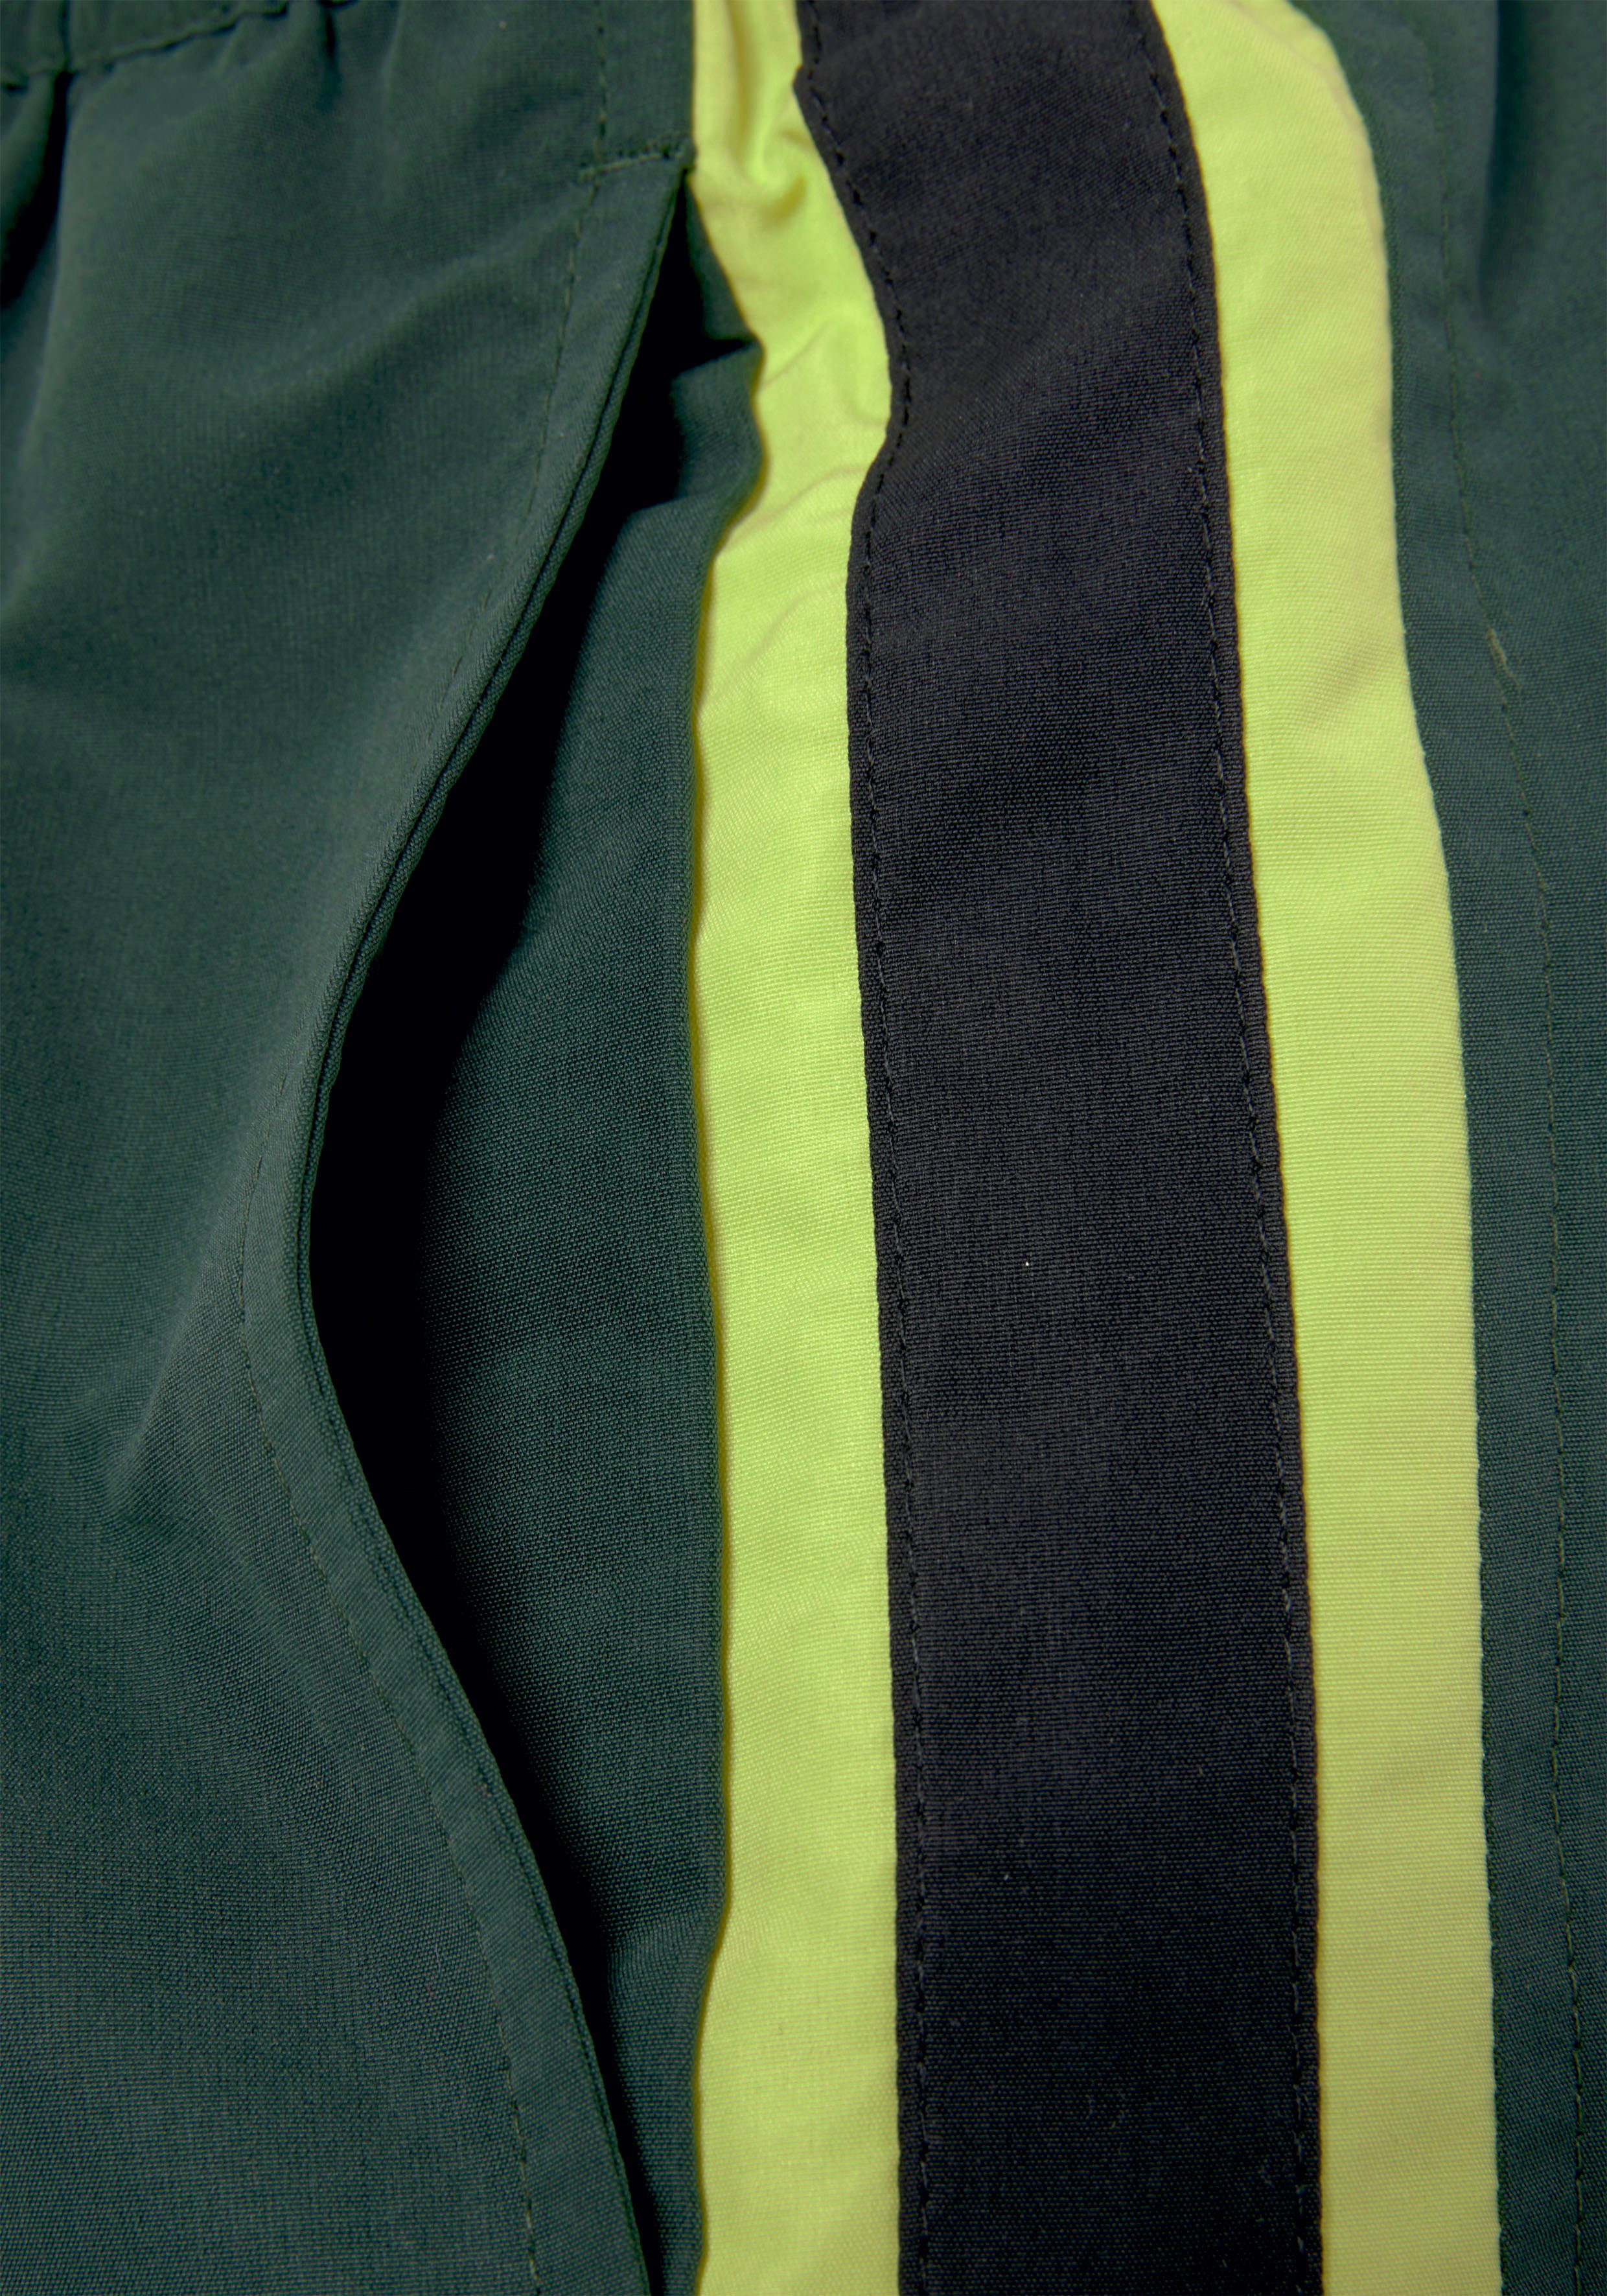 oliv-lime Details kontrastfarbenen mit Buffalo Badeshorts